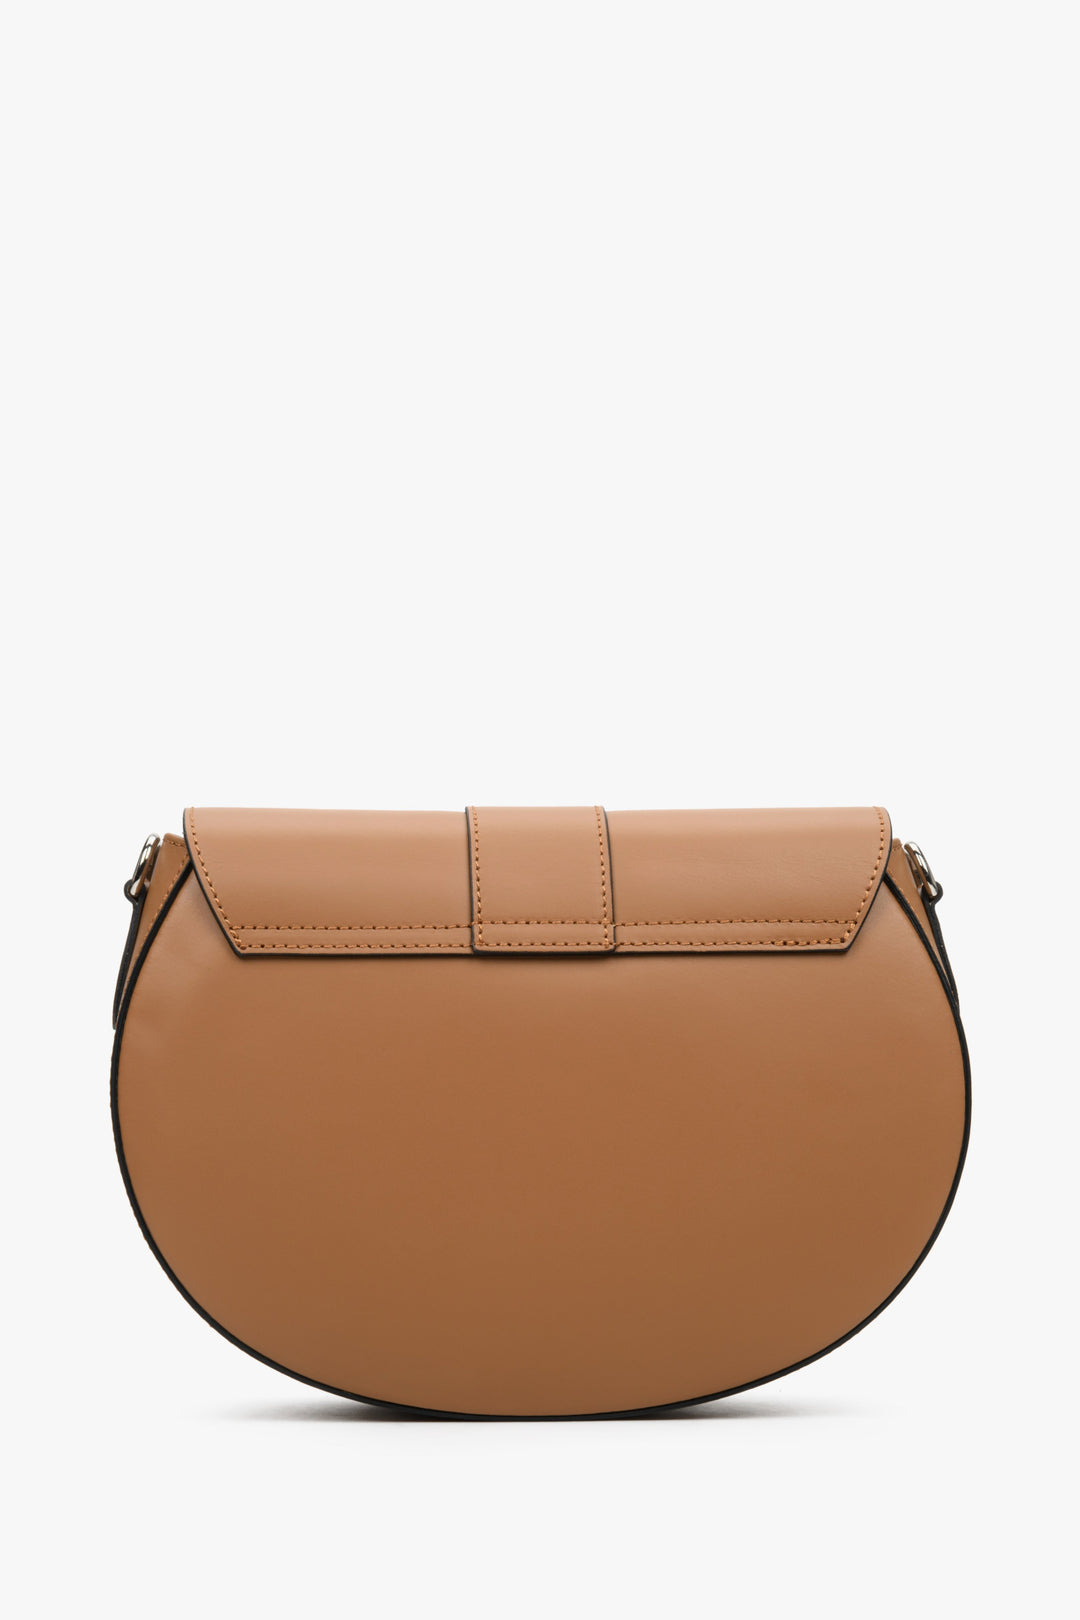 Leather, women's brown horseshoe-shaped handbag by Estro - reverse side.